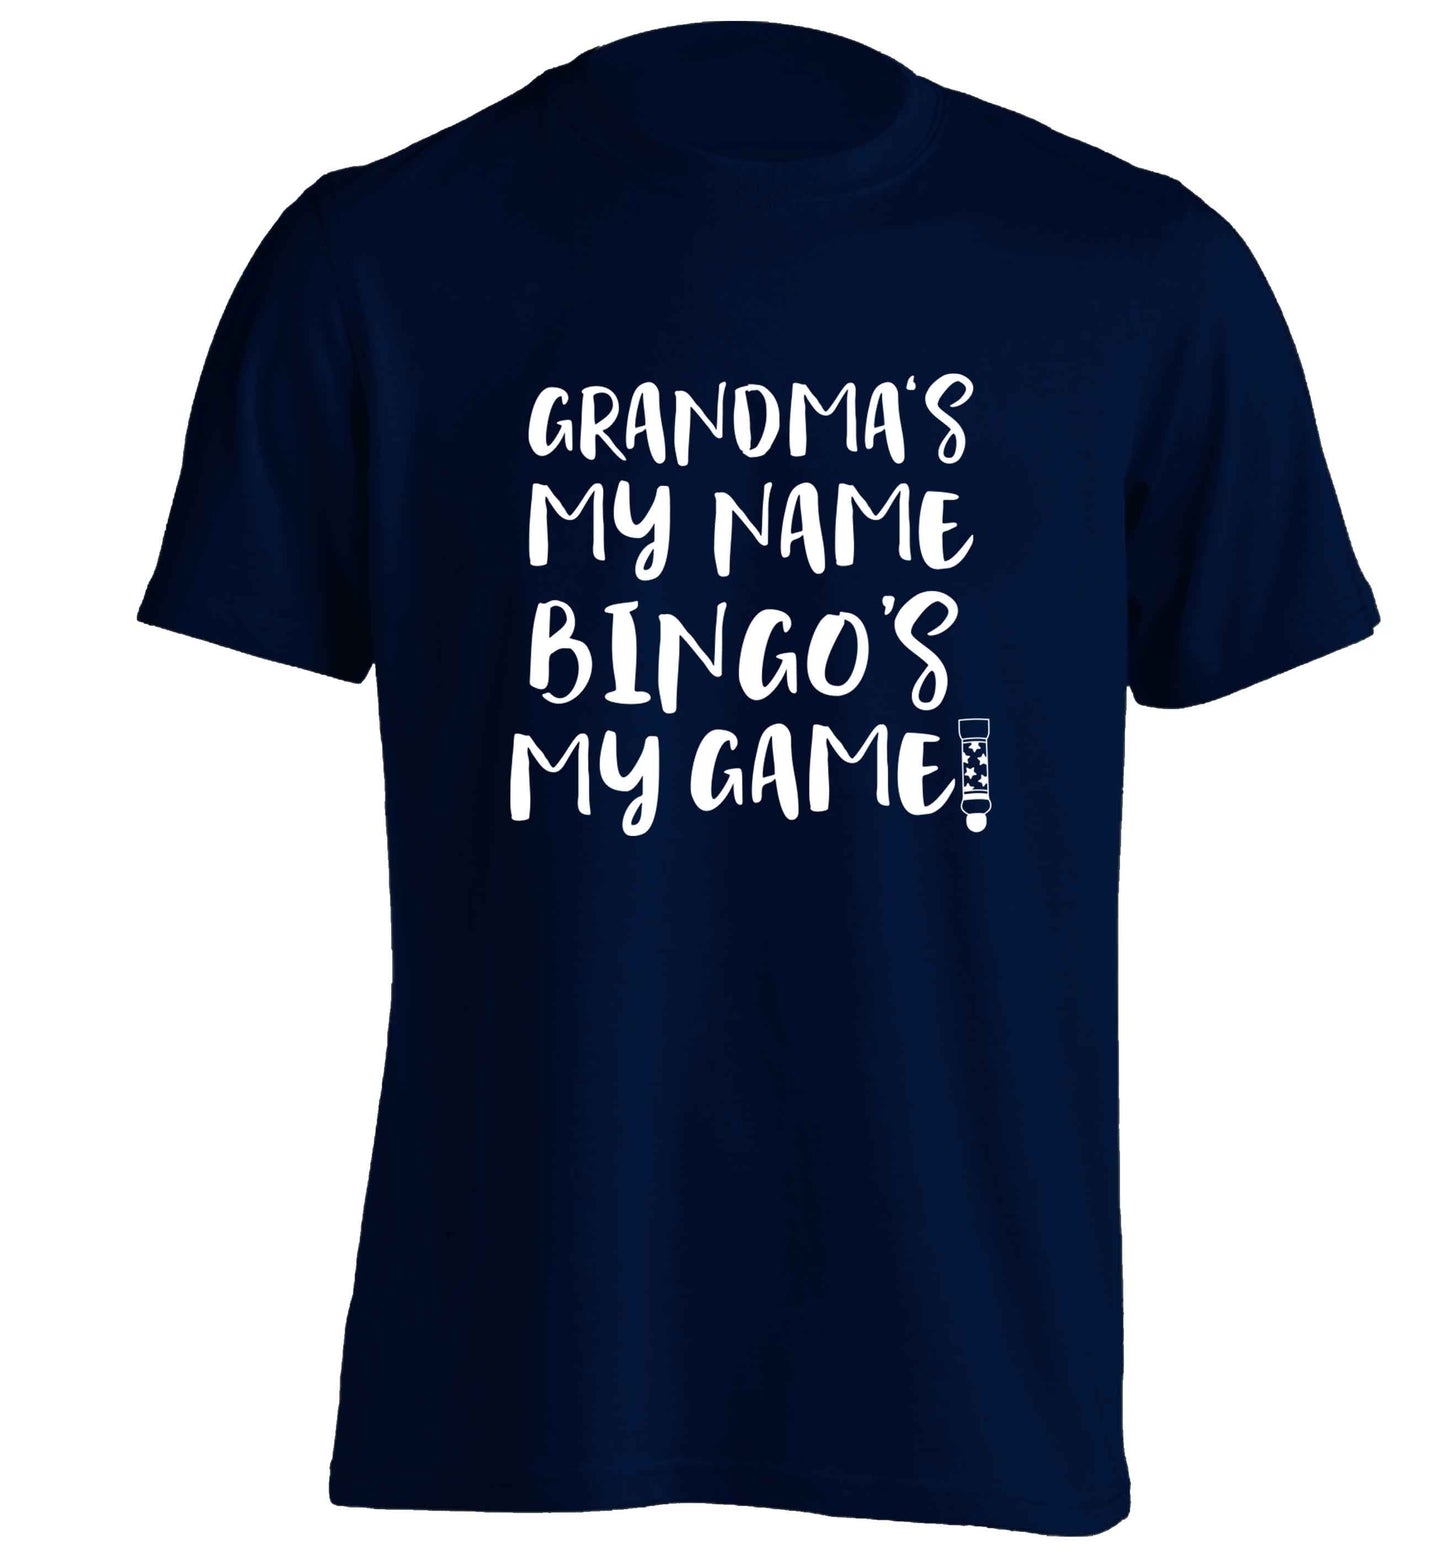 Grandma's my name bingo's my game! adults unisex navy Tshirt 2XL